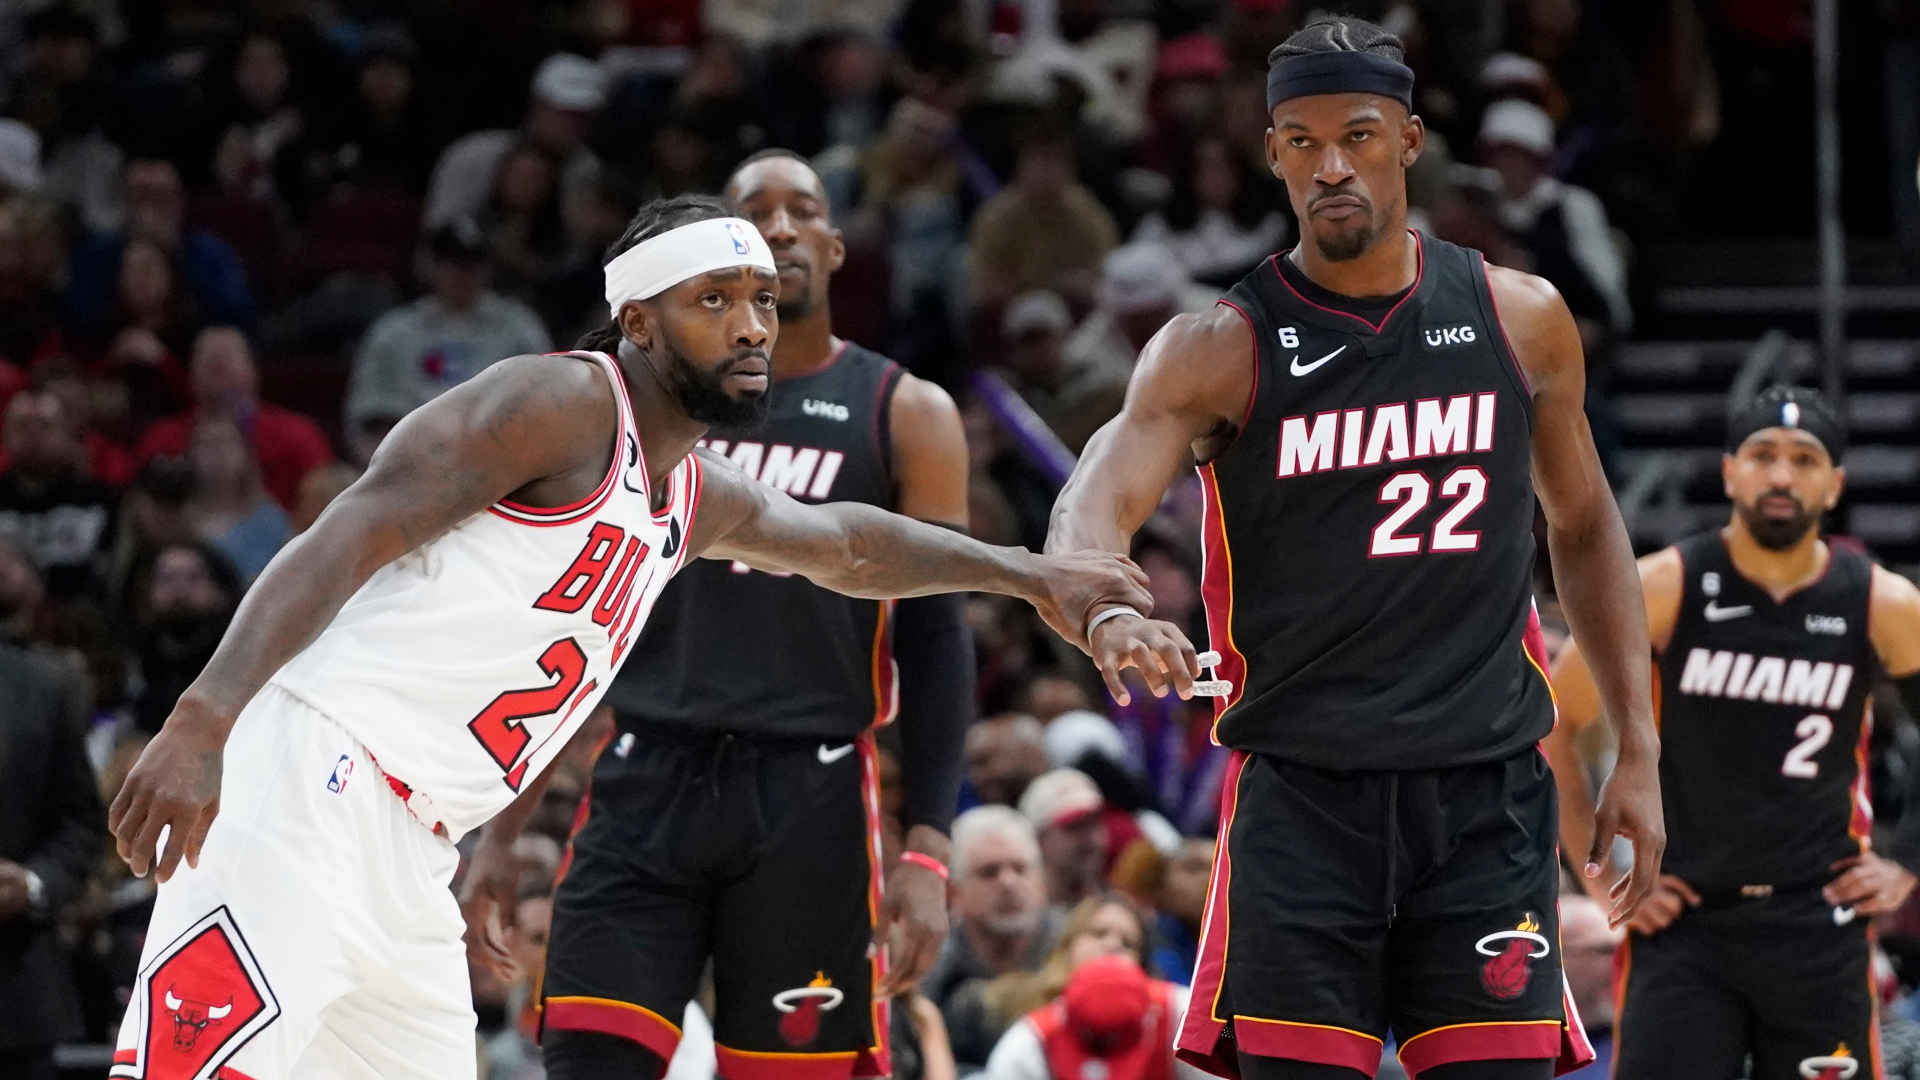 Bulls Vs. Heat Live Stream: Watch NBA Play-In Game Online, On TV